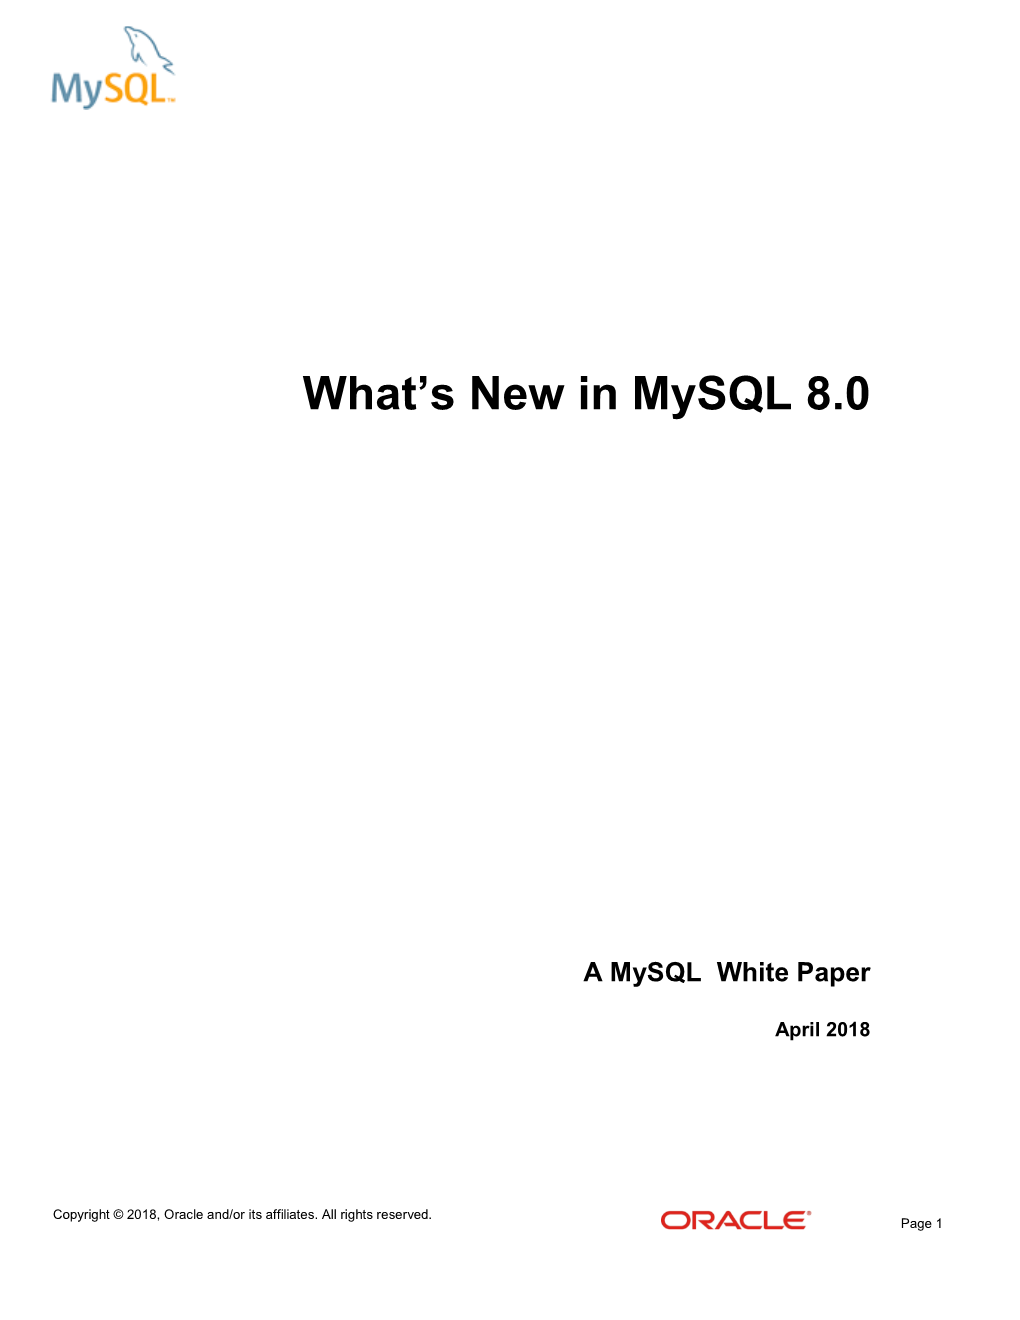 What's New in Mysql